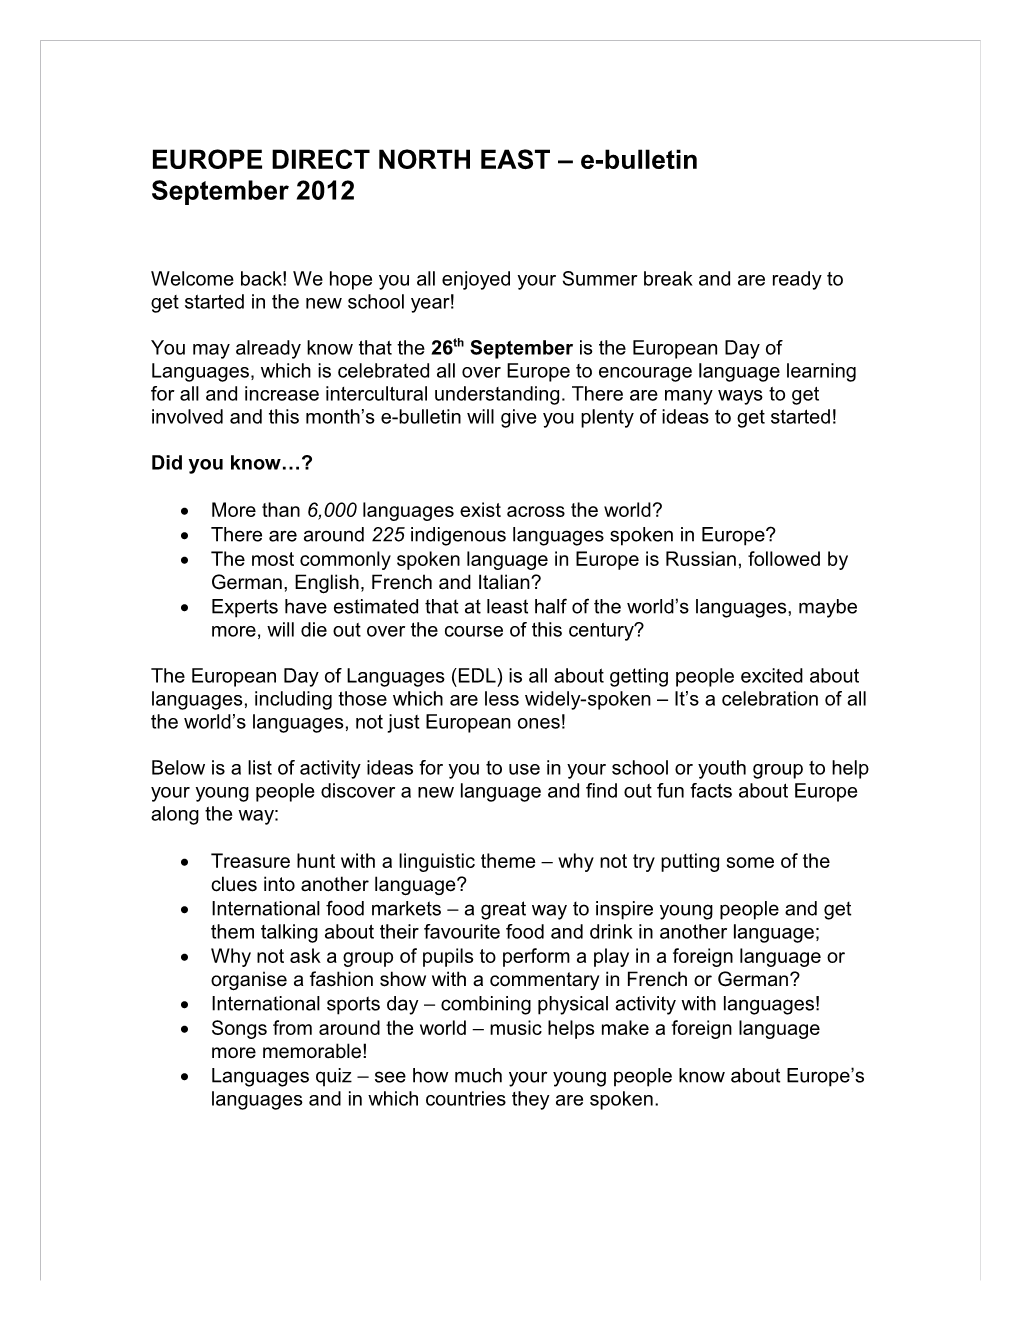 EUROPE DIRECT NORTH EAST E-Bulletin